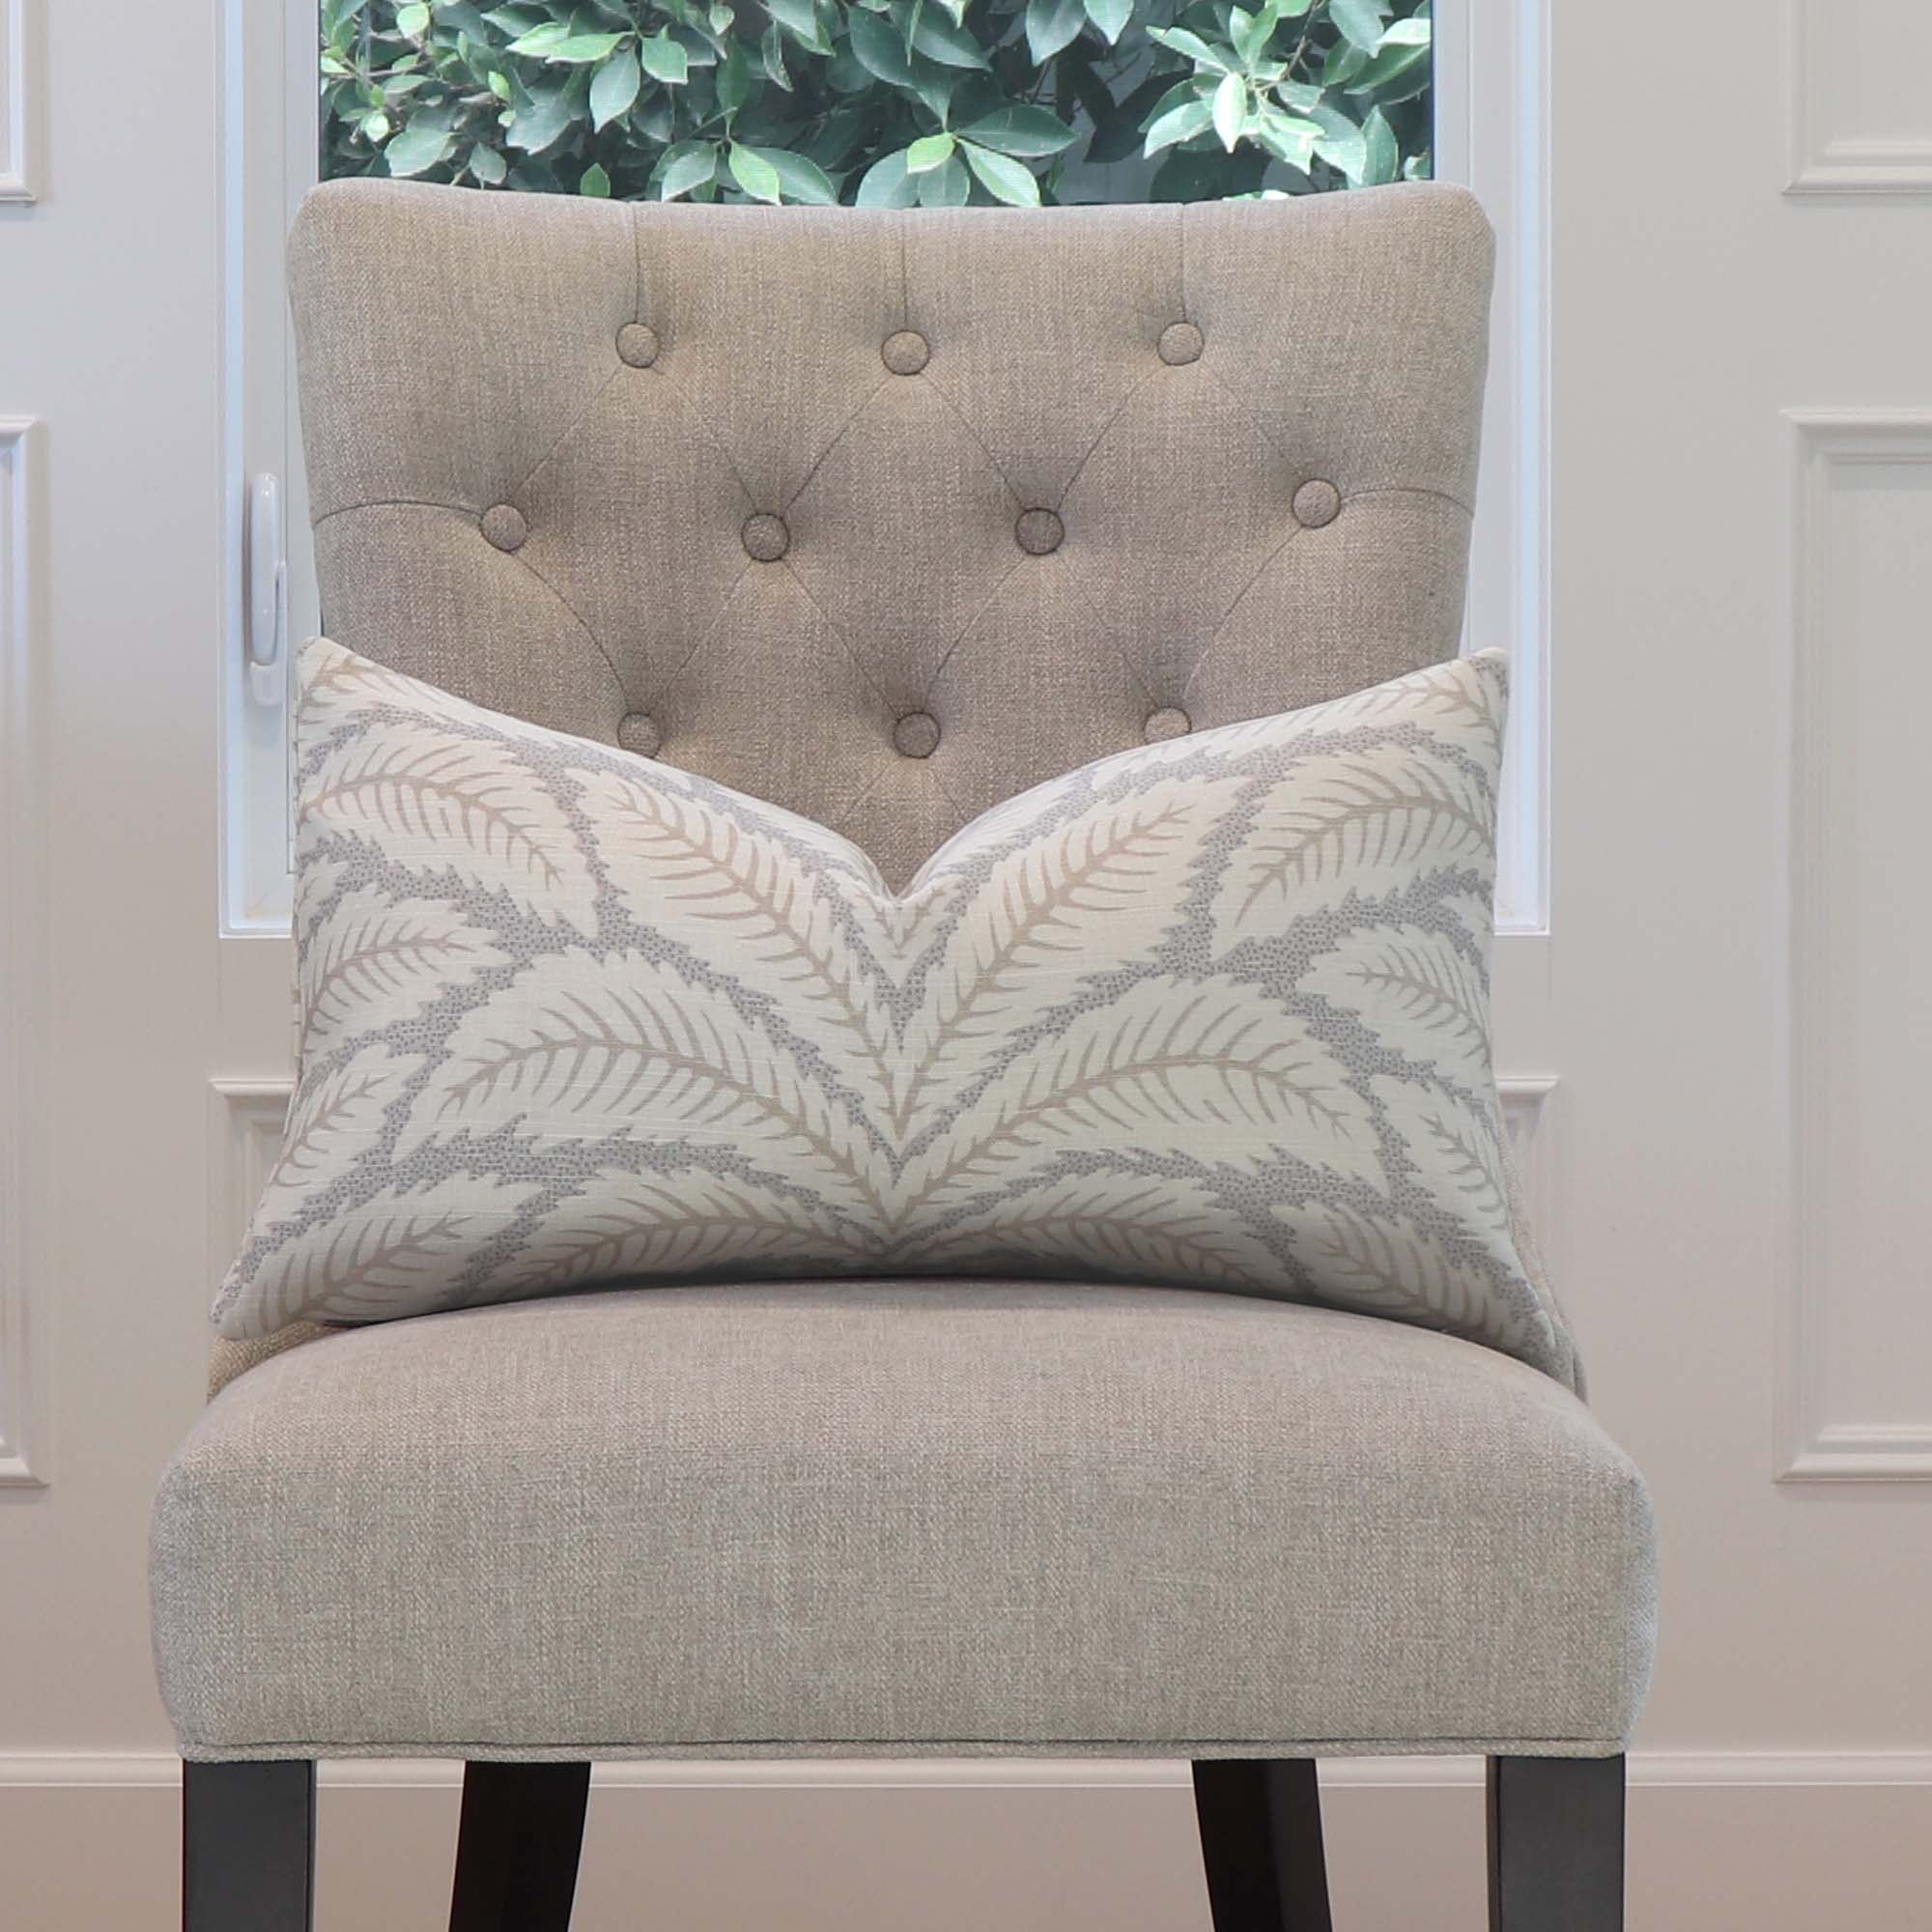 Brunschwig Fils Talavera Linen Birch Palm Designer Luxury Decorative Lumbar Throw Pillow Cover on Armless Chair